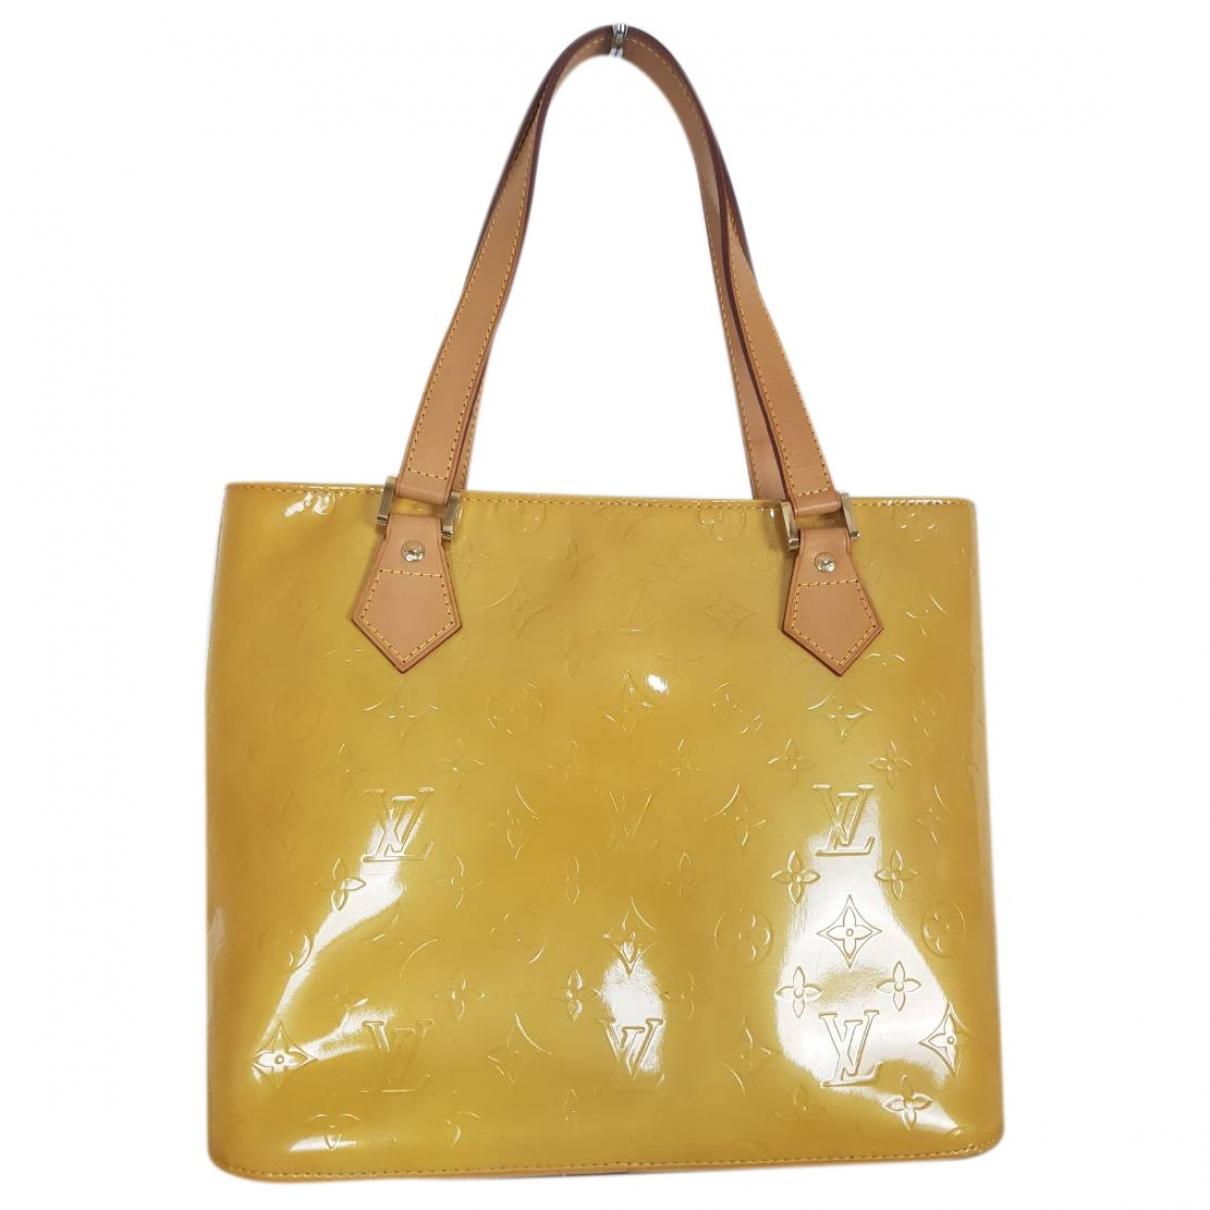 Lyst - Louis Vuitton Vintage Houston Yellow Leather Handbag in Yellow